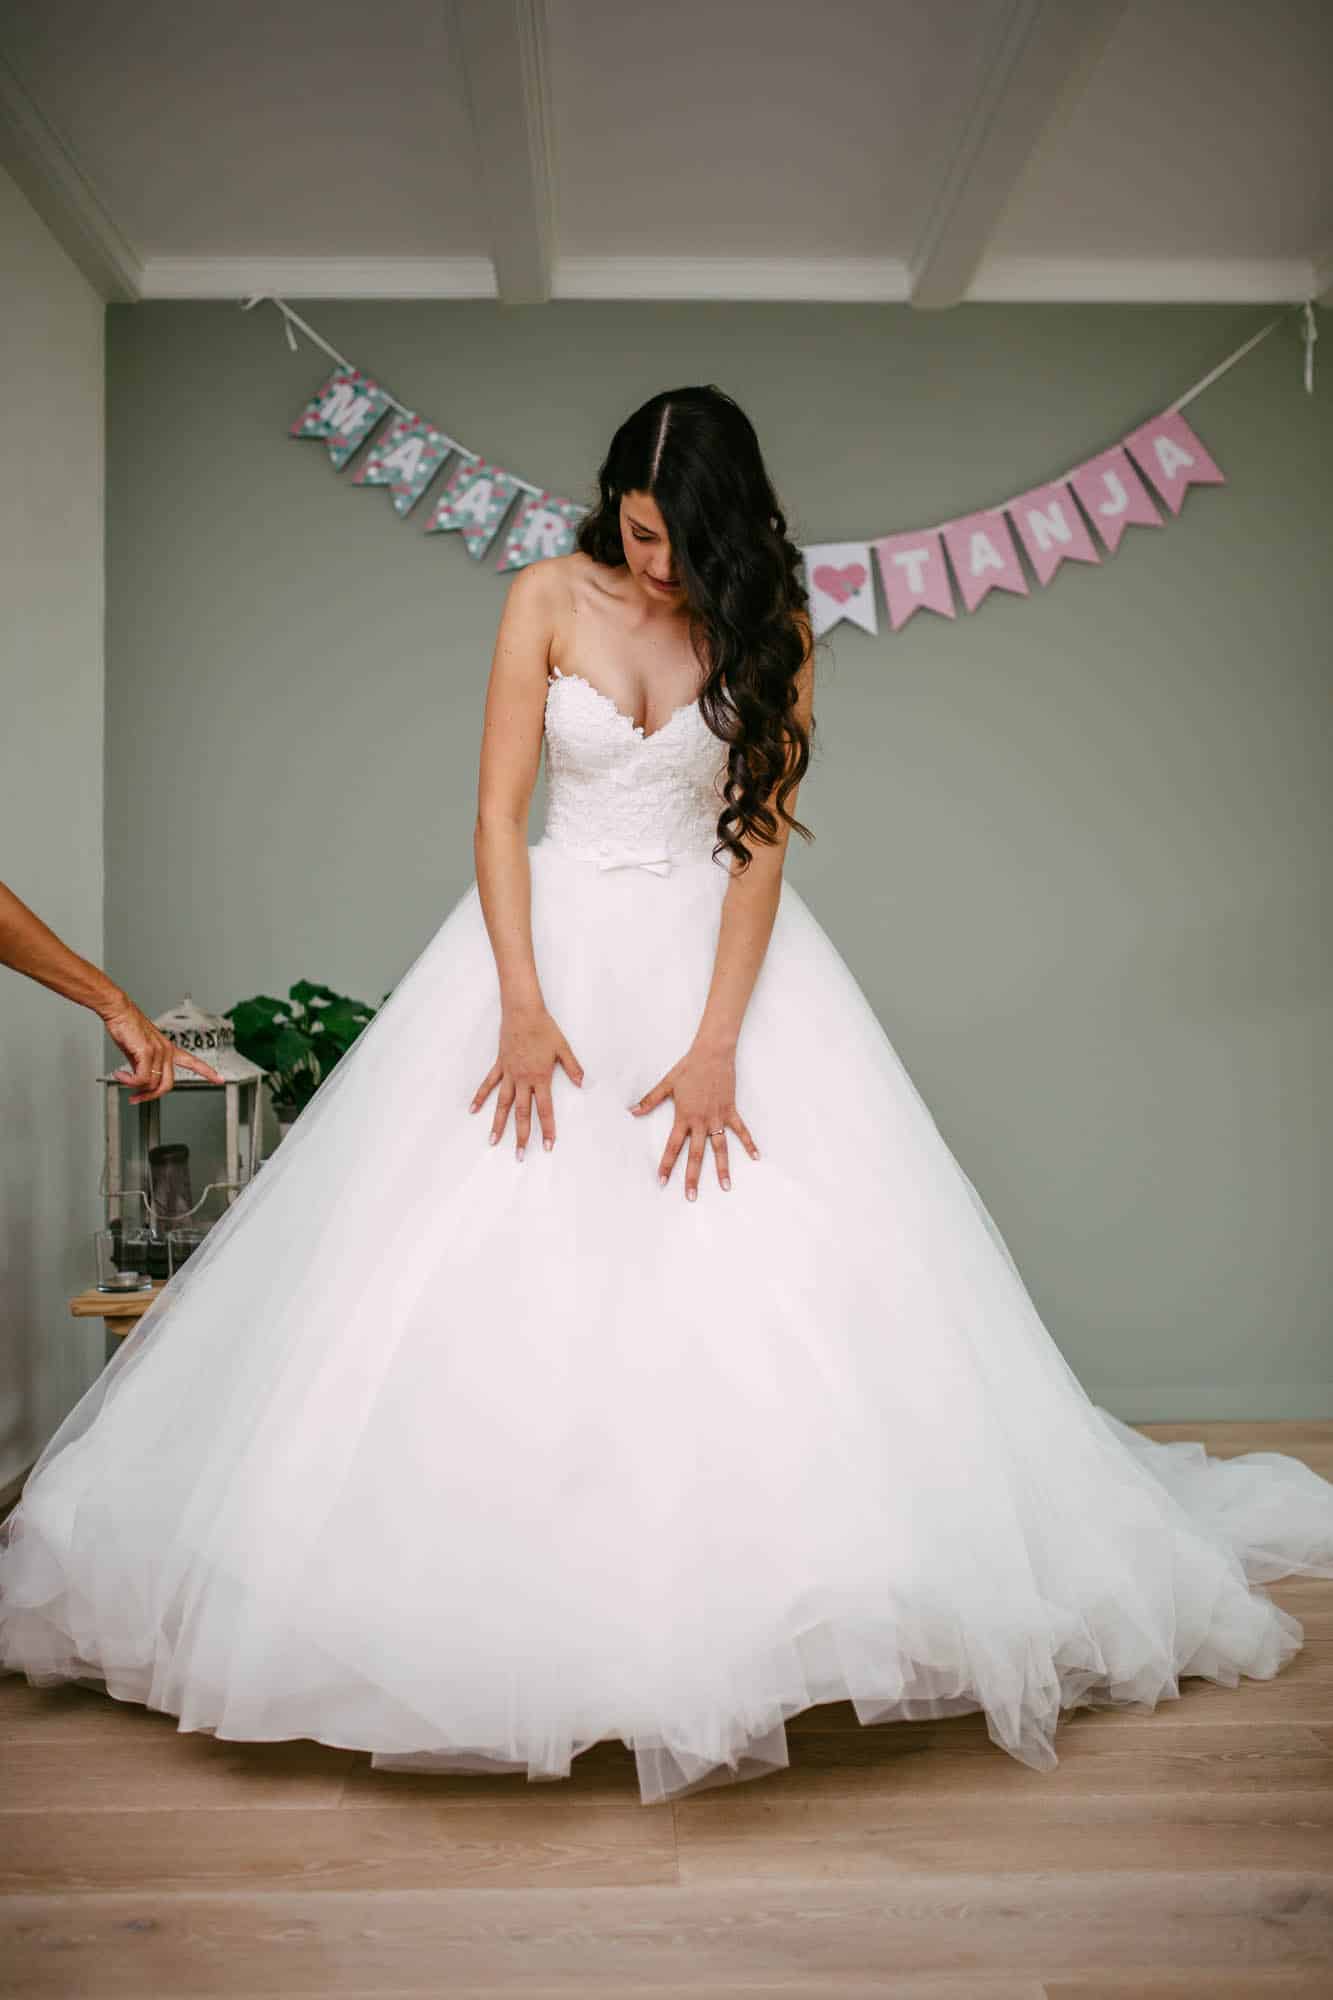 A bride wearing an A-line wedding dress in a room.